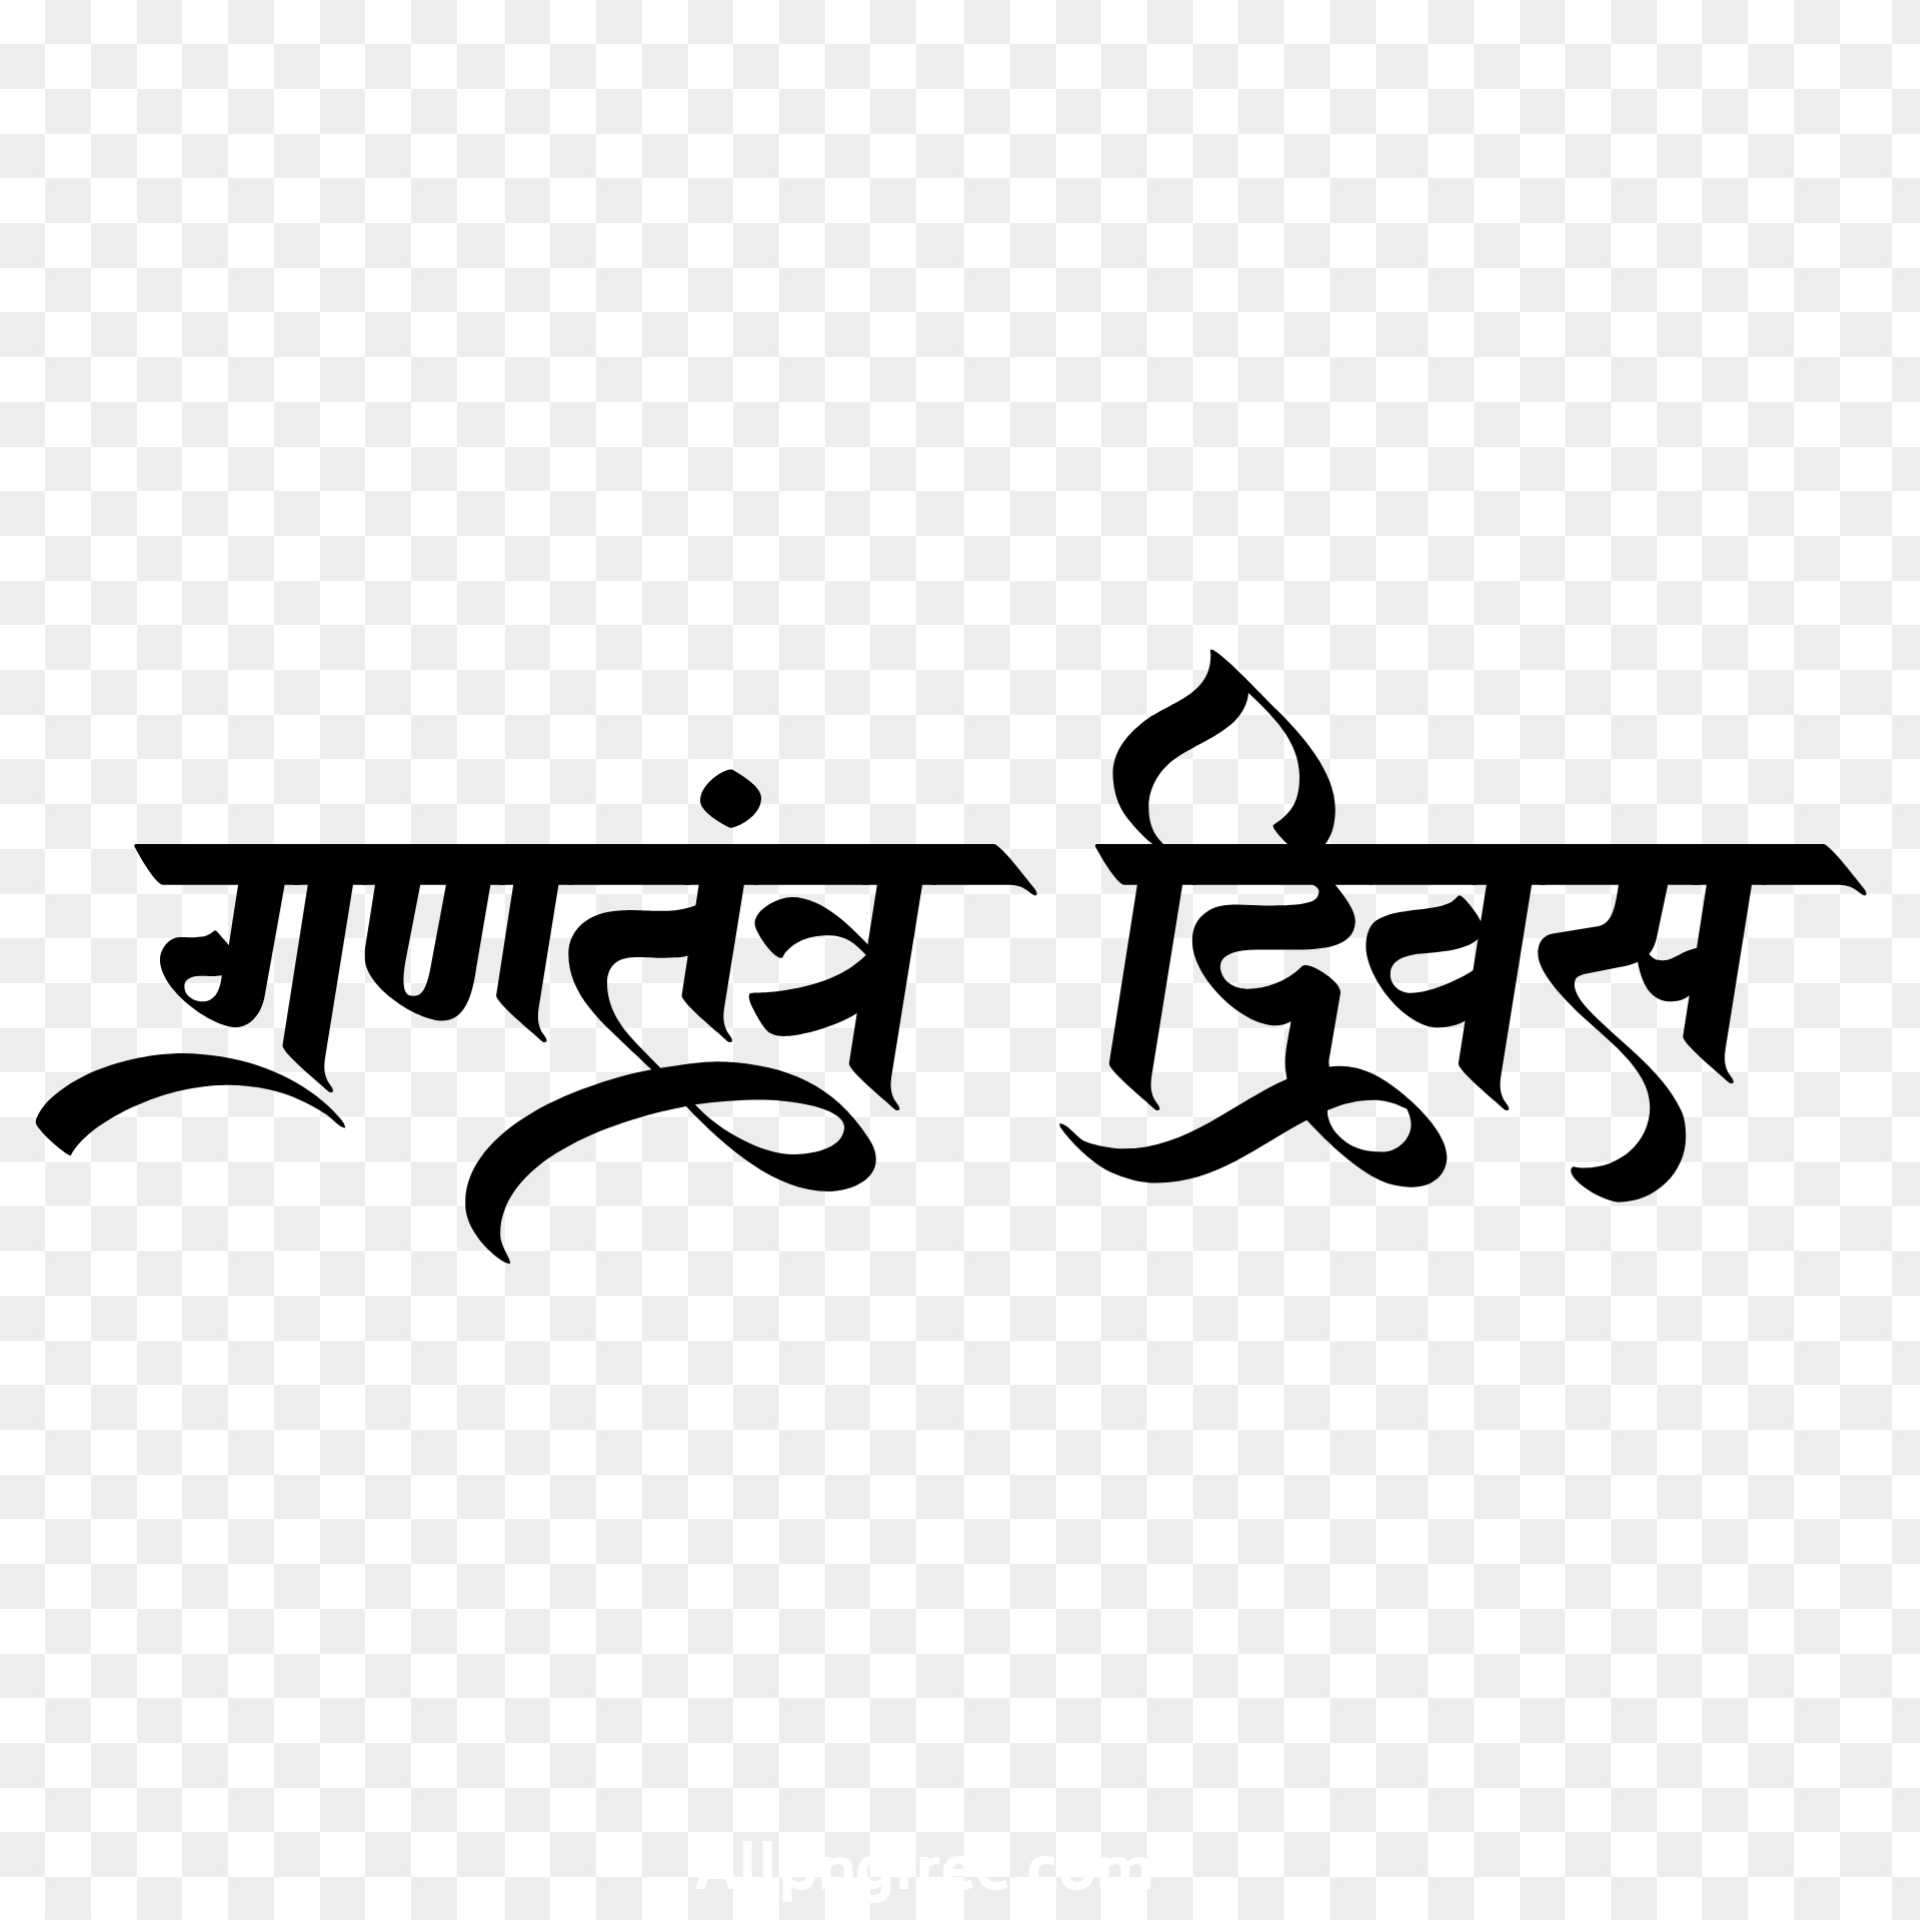 Republic Day Hindi PNG images